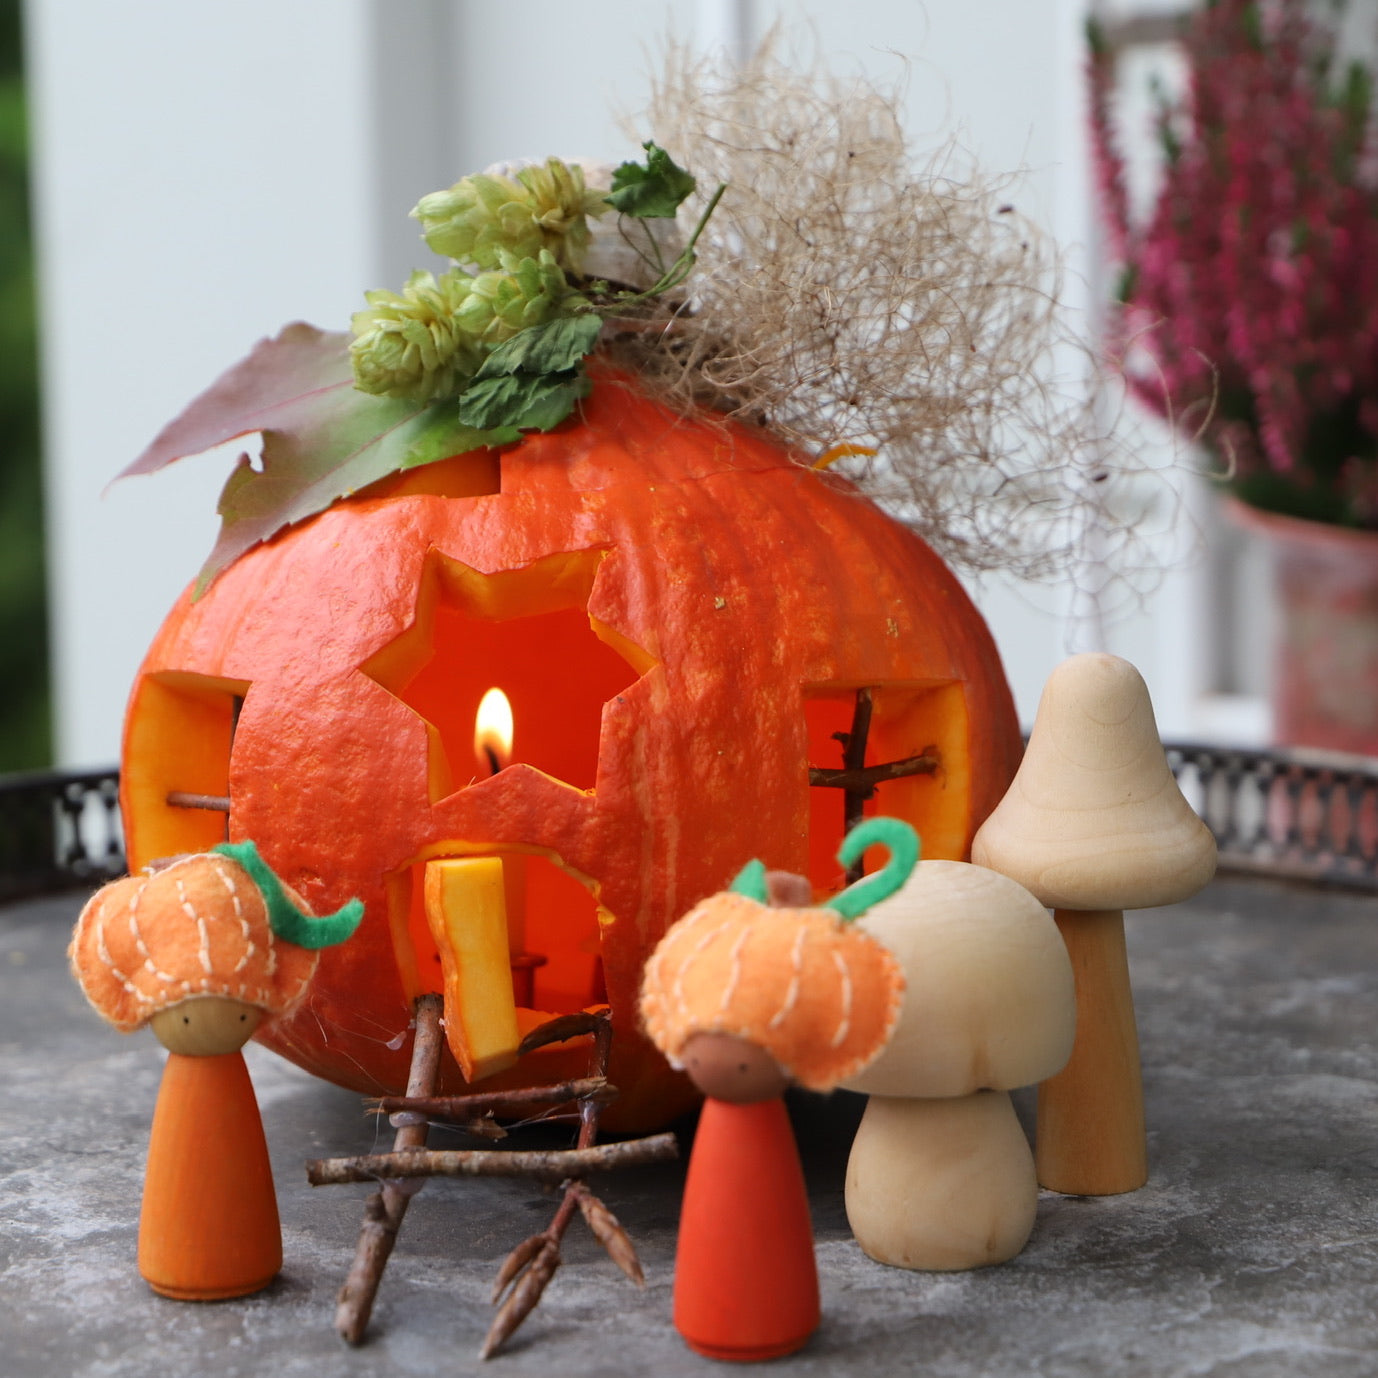 A Pumpkin Fairy House with Peg dolls and Mushrooms